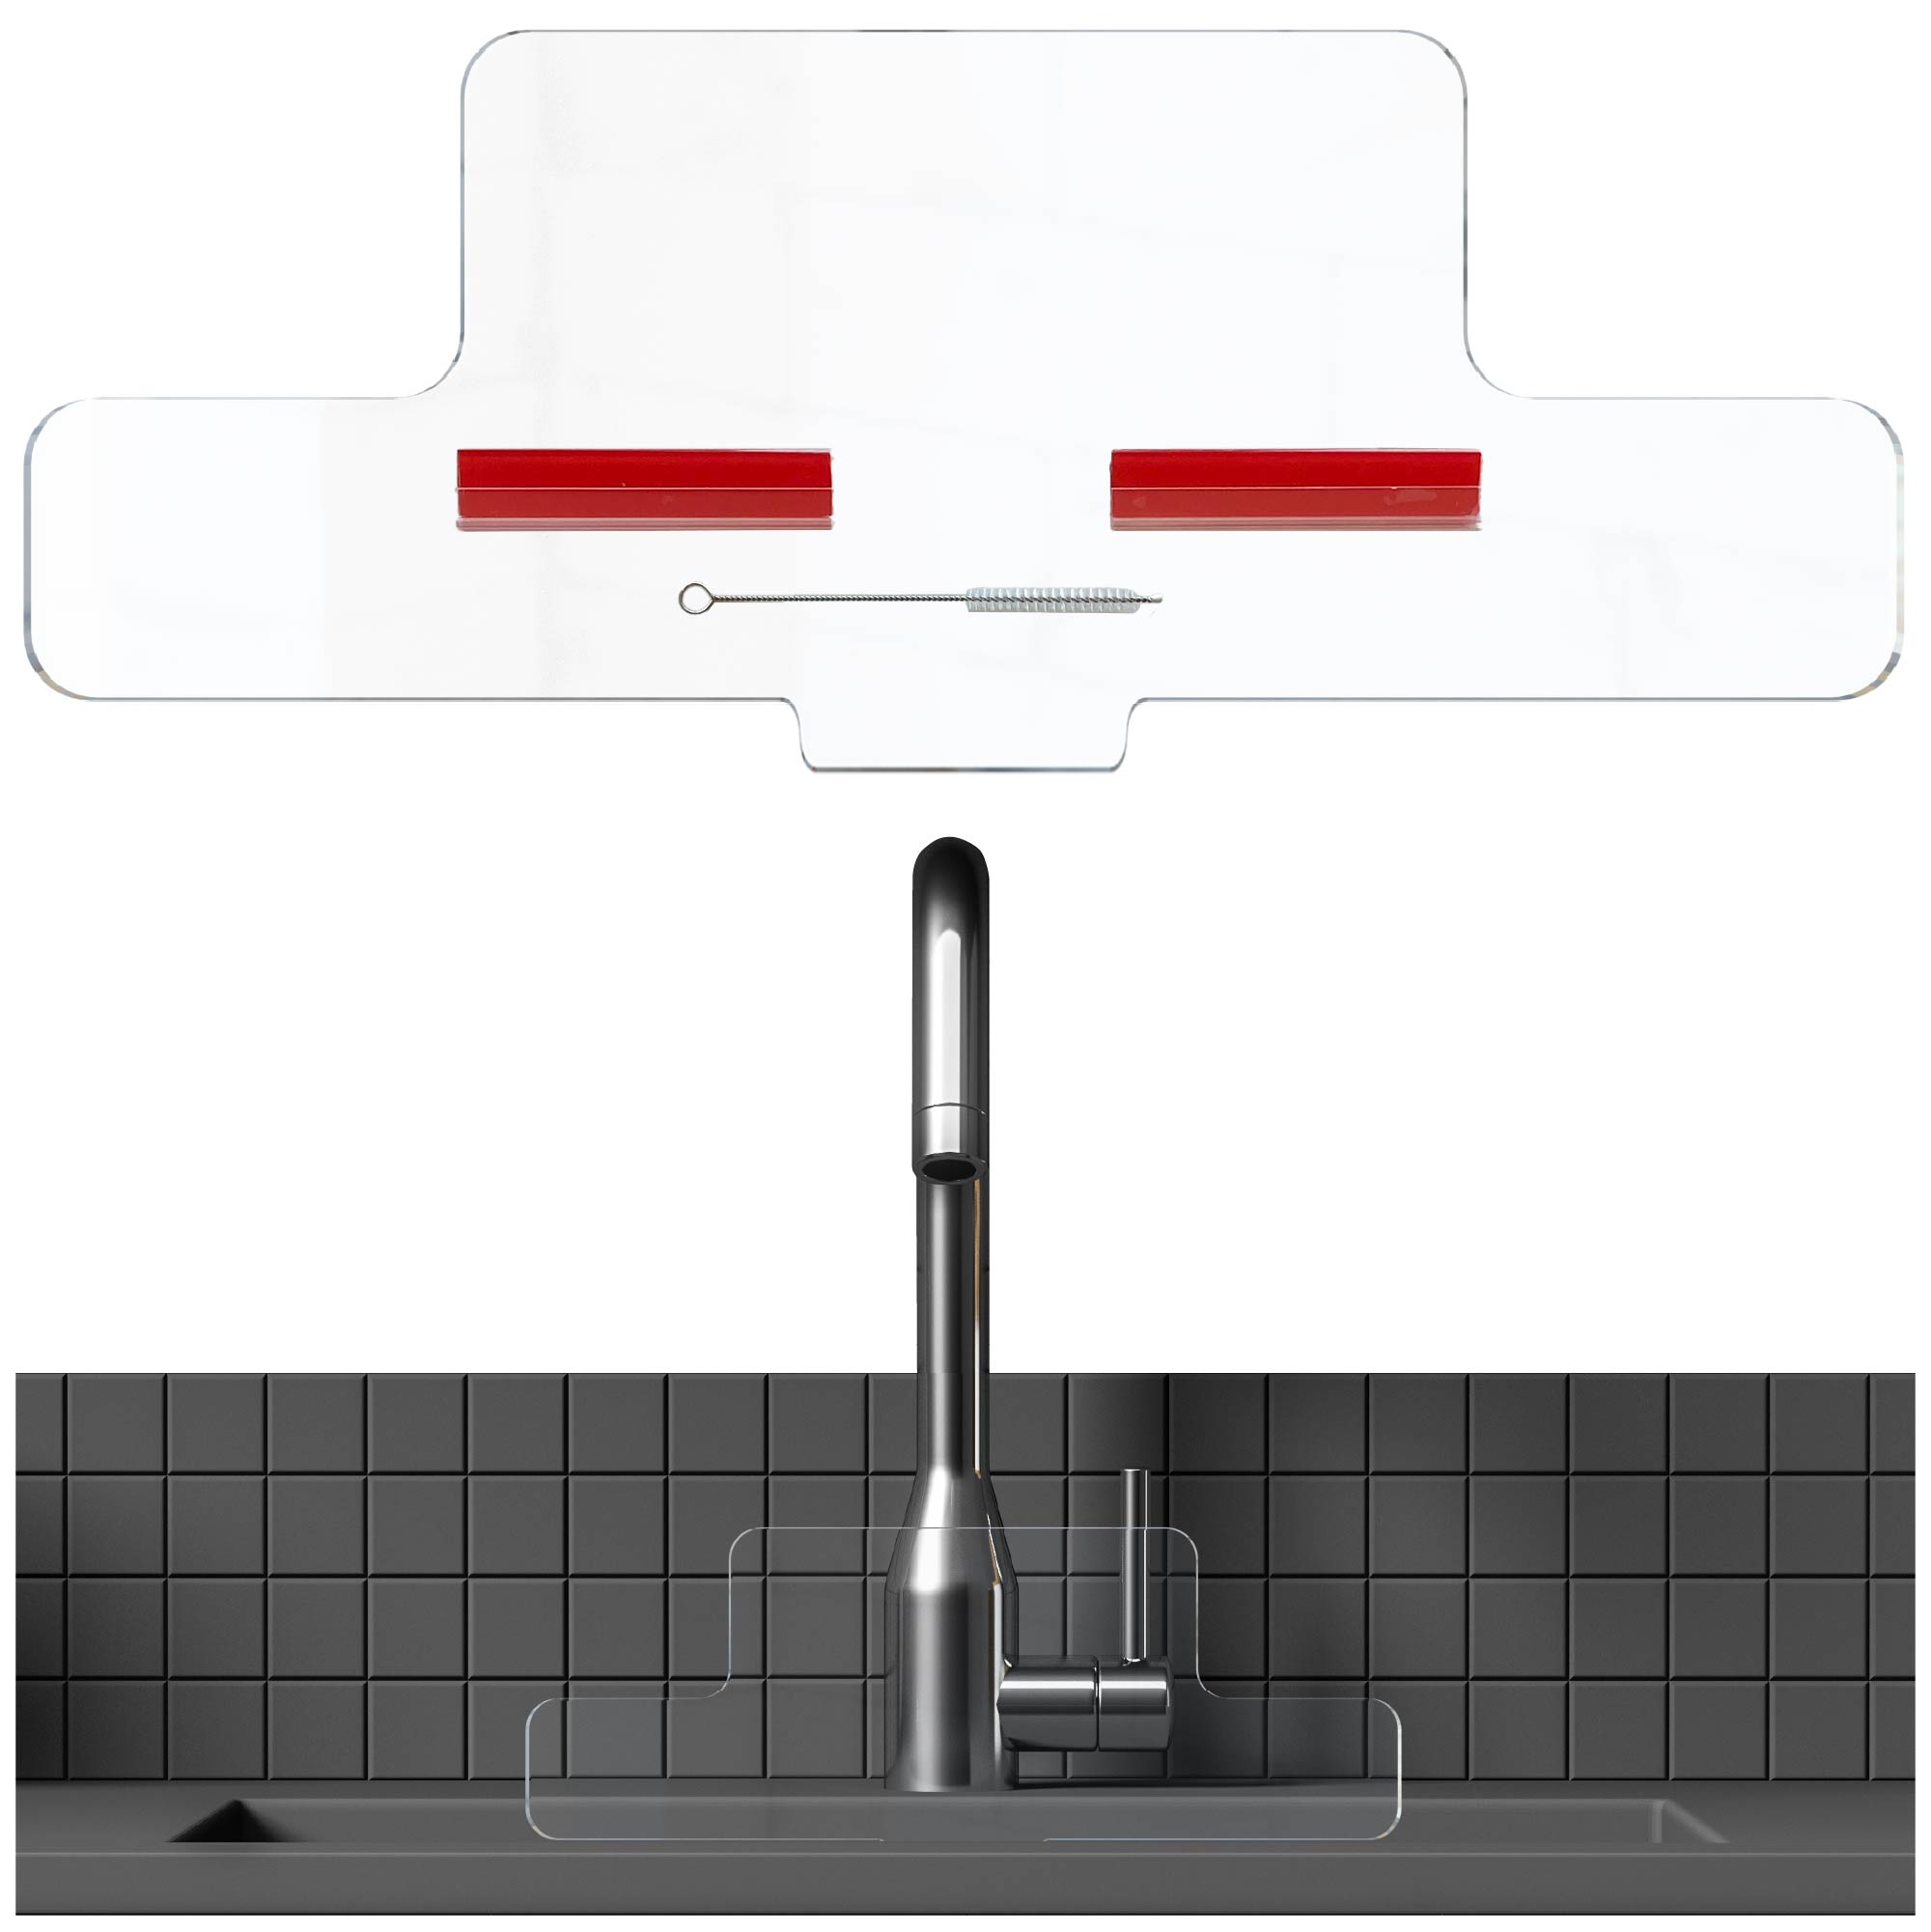 Sink Splash Guard Deck Plate, Aha Homeware Behind The Sink Water Splash  Guard 2 holes Soap Dispenser, Faucet Absorbent Mat Sprayer, Faucet Handle  Drip